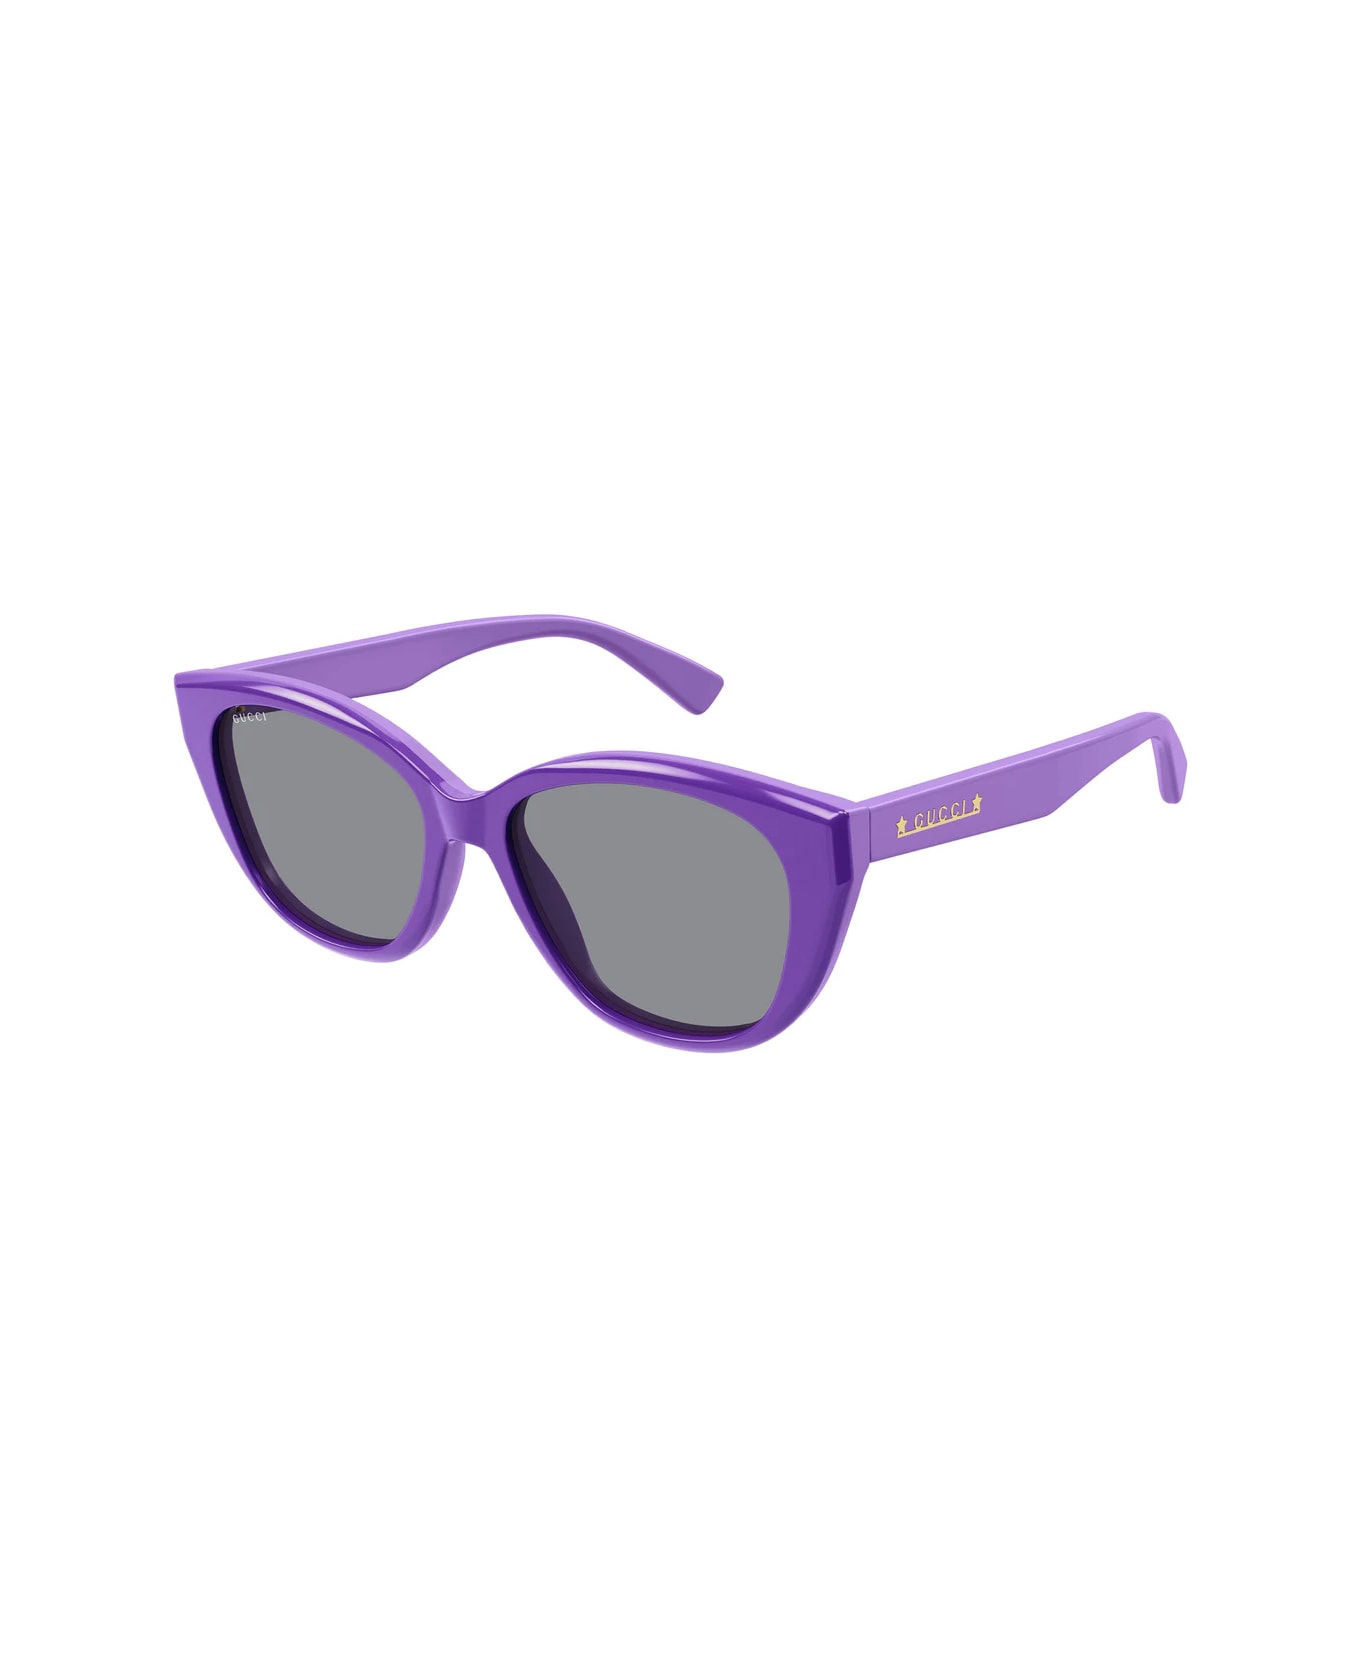 Gucci Eyewear Gucci Gg1588s Linea Lettering 004 Sunglasses - Viola